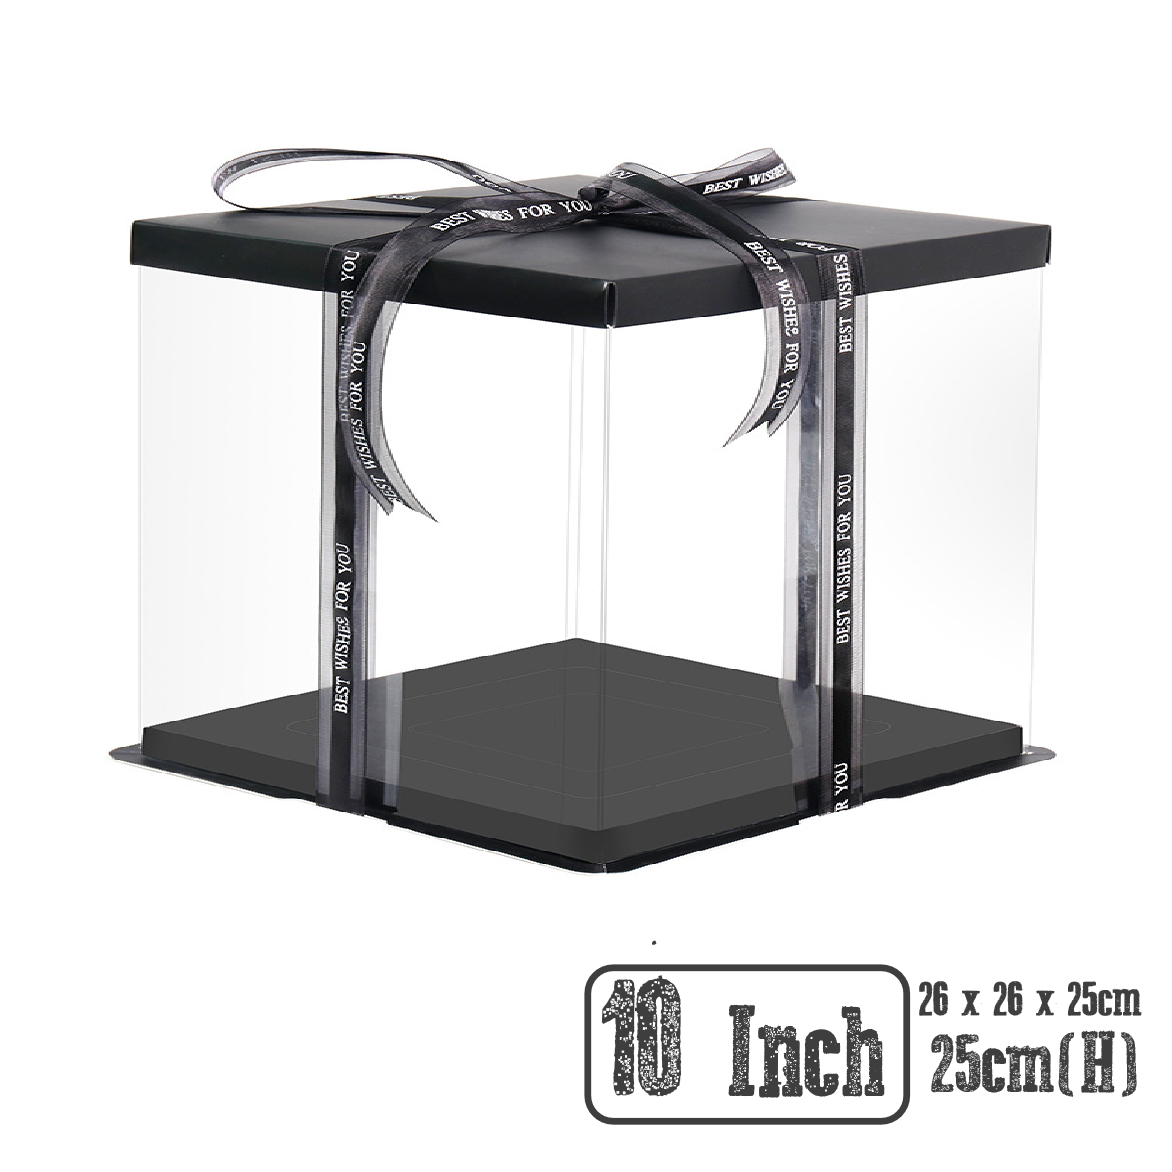 Cake Packaging - Elegant 10 Inch Cake Box Packaging 25cm Height - Black